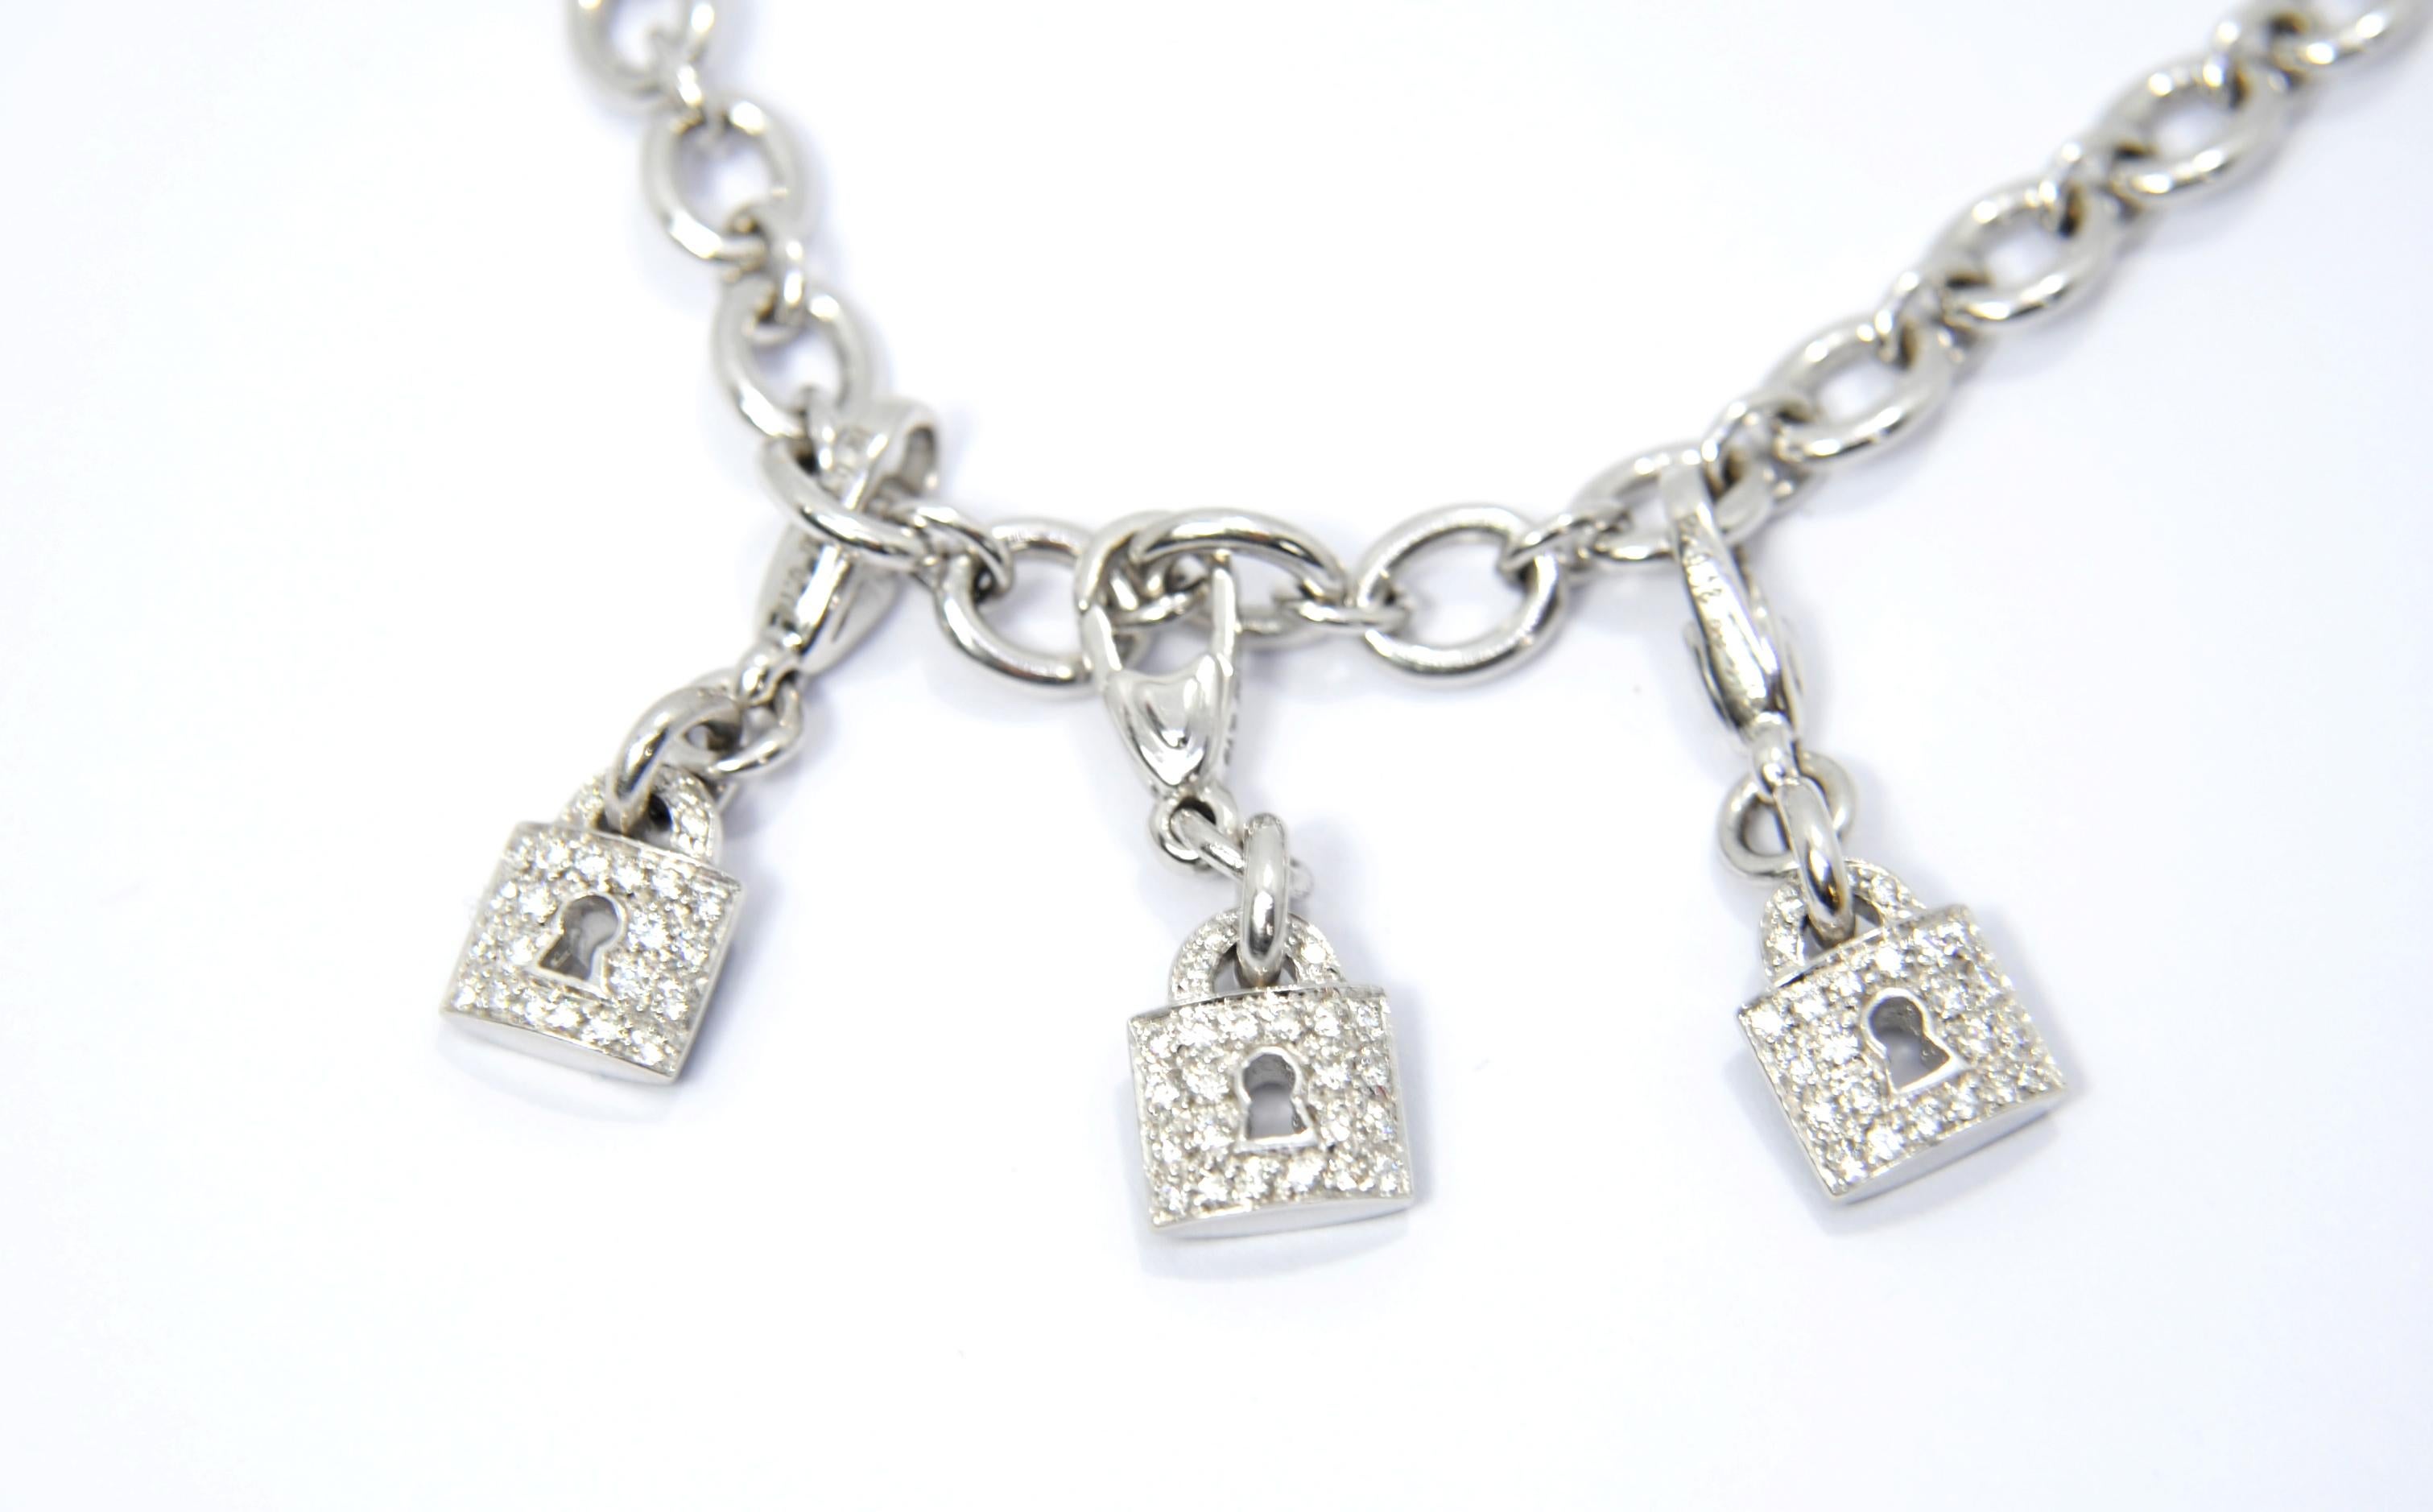 Brilliant Cut Crivelli Lock Charm Bracelet in 18 Karat White Gold and White and Black Diamonds